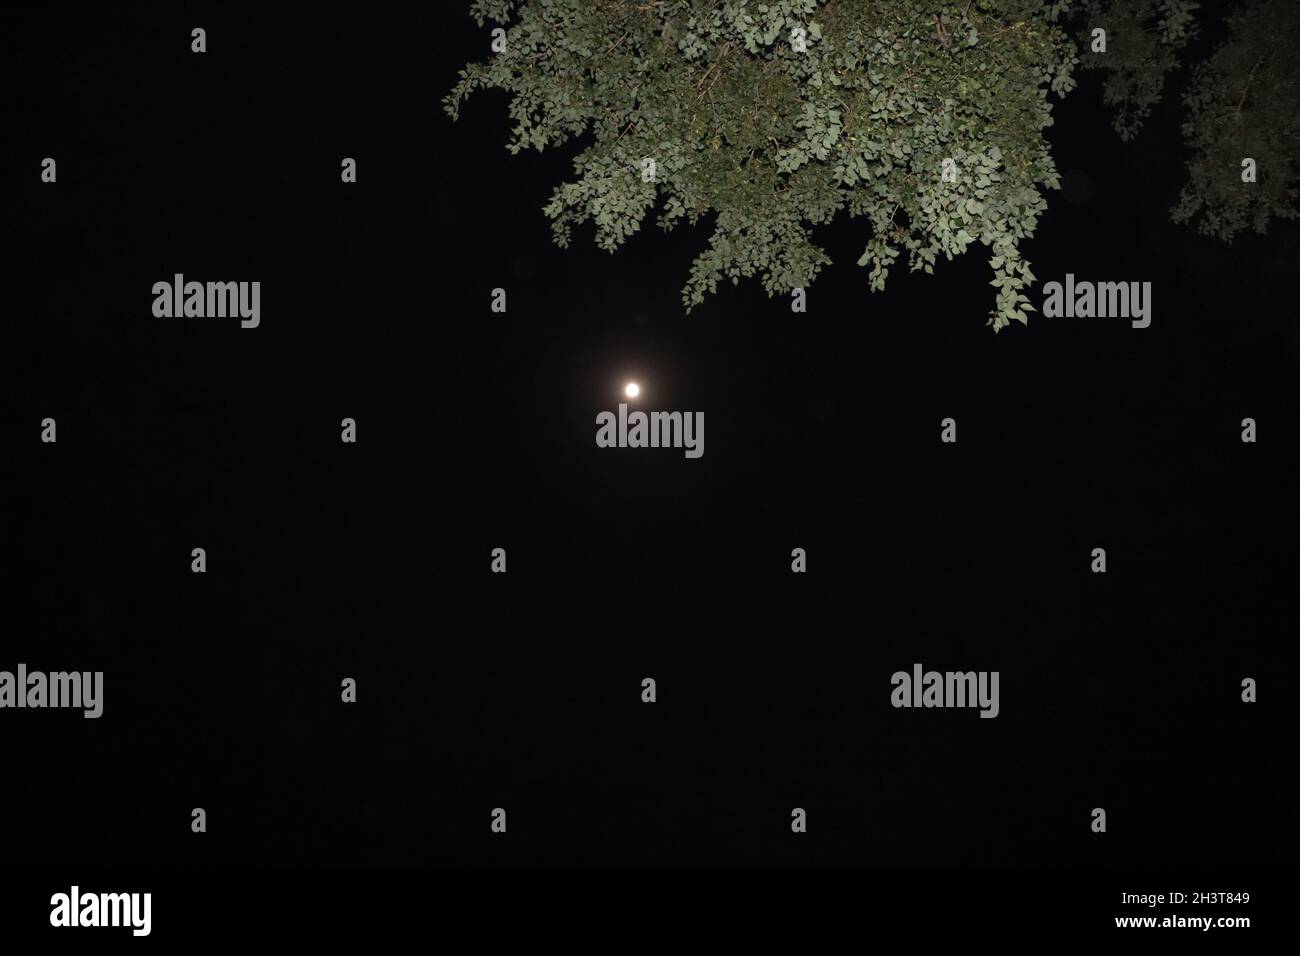 FULL MOON IN NIGHT VIEW |MOON AN NIGHT PHOTOGRAPHY |TREES  IN DARK NIGHT Stock Photo